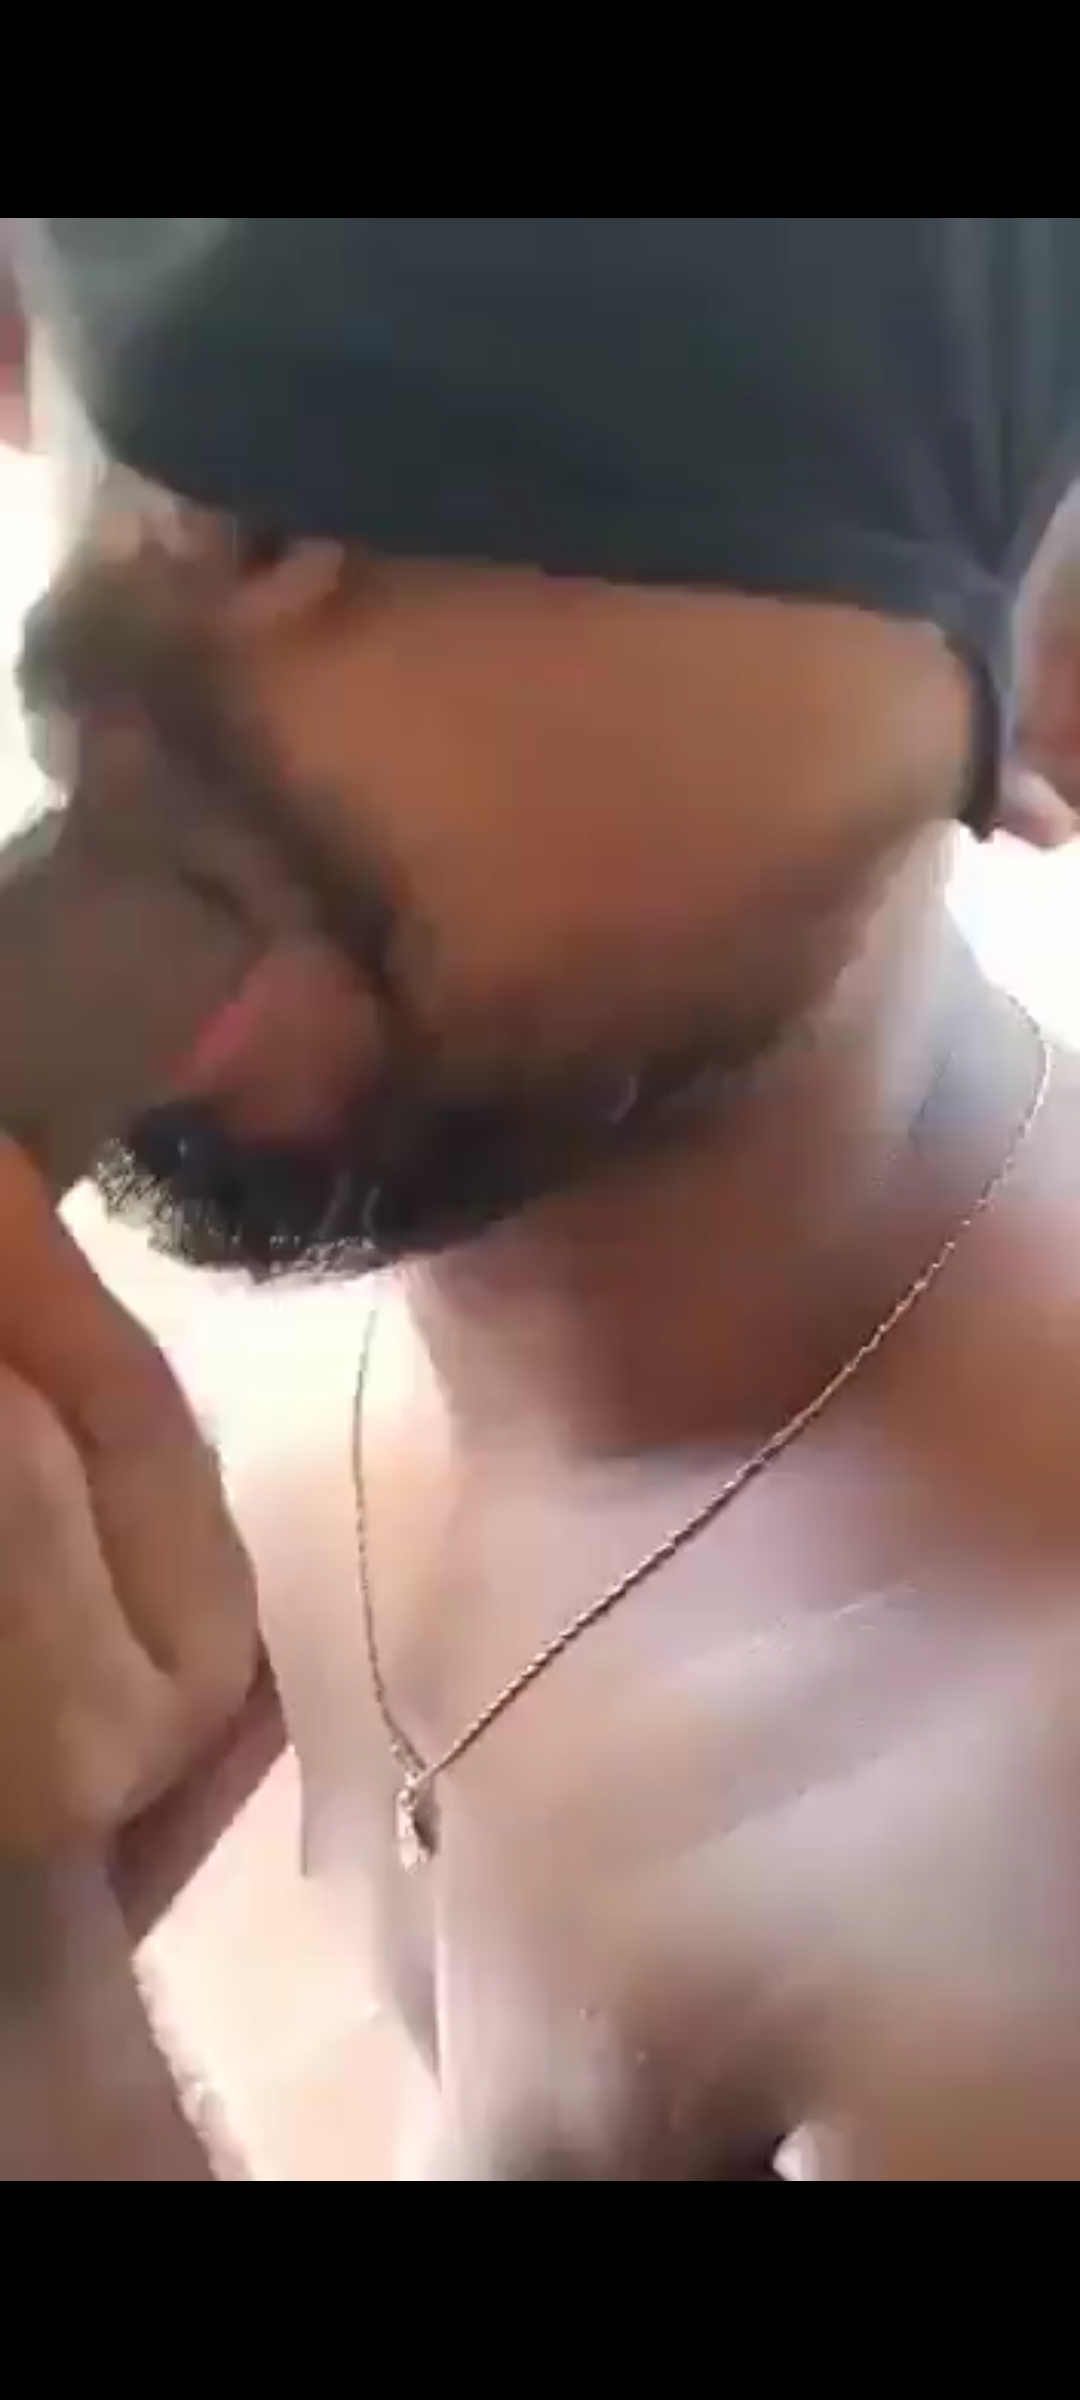 Tamil gay blowjob his friend in public bathroom pic